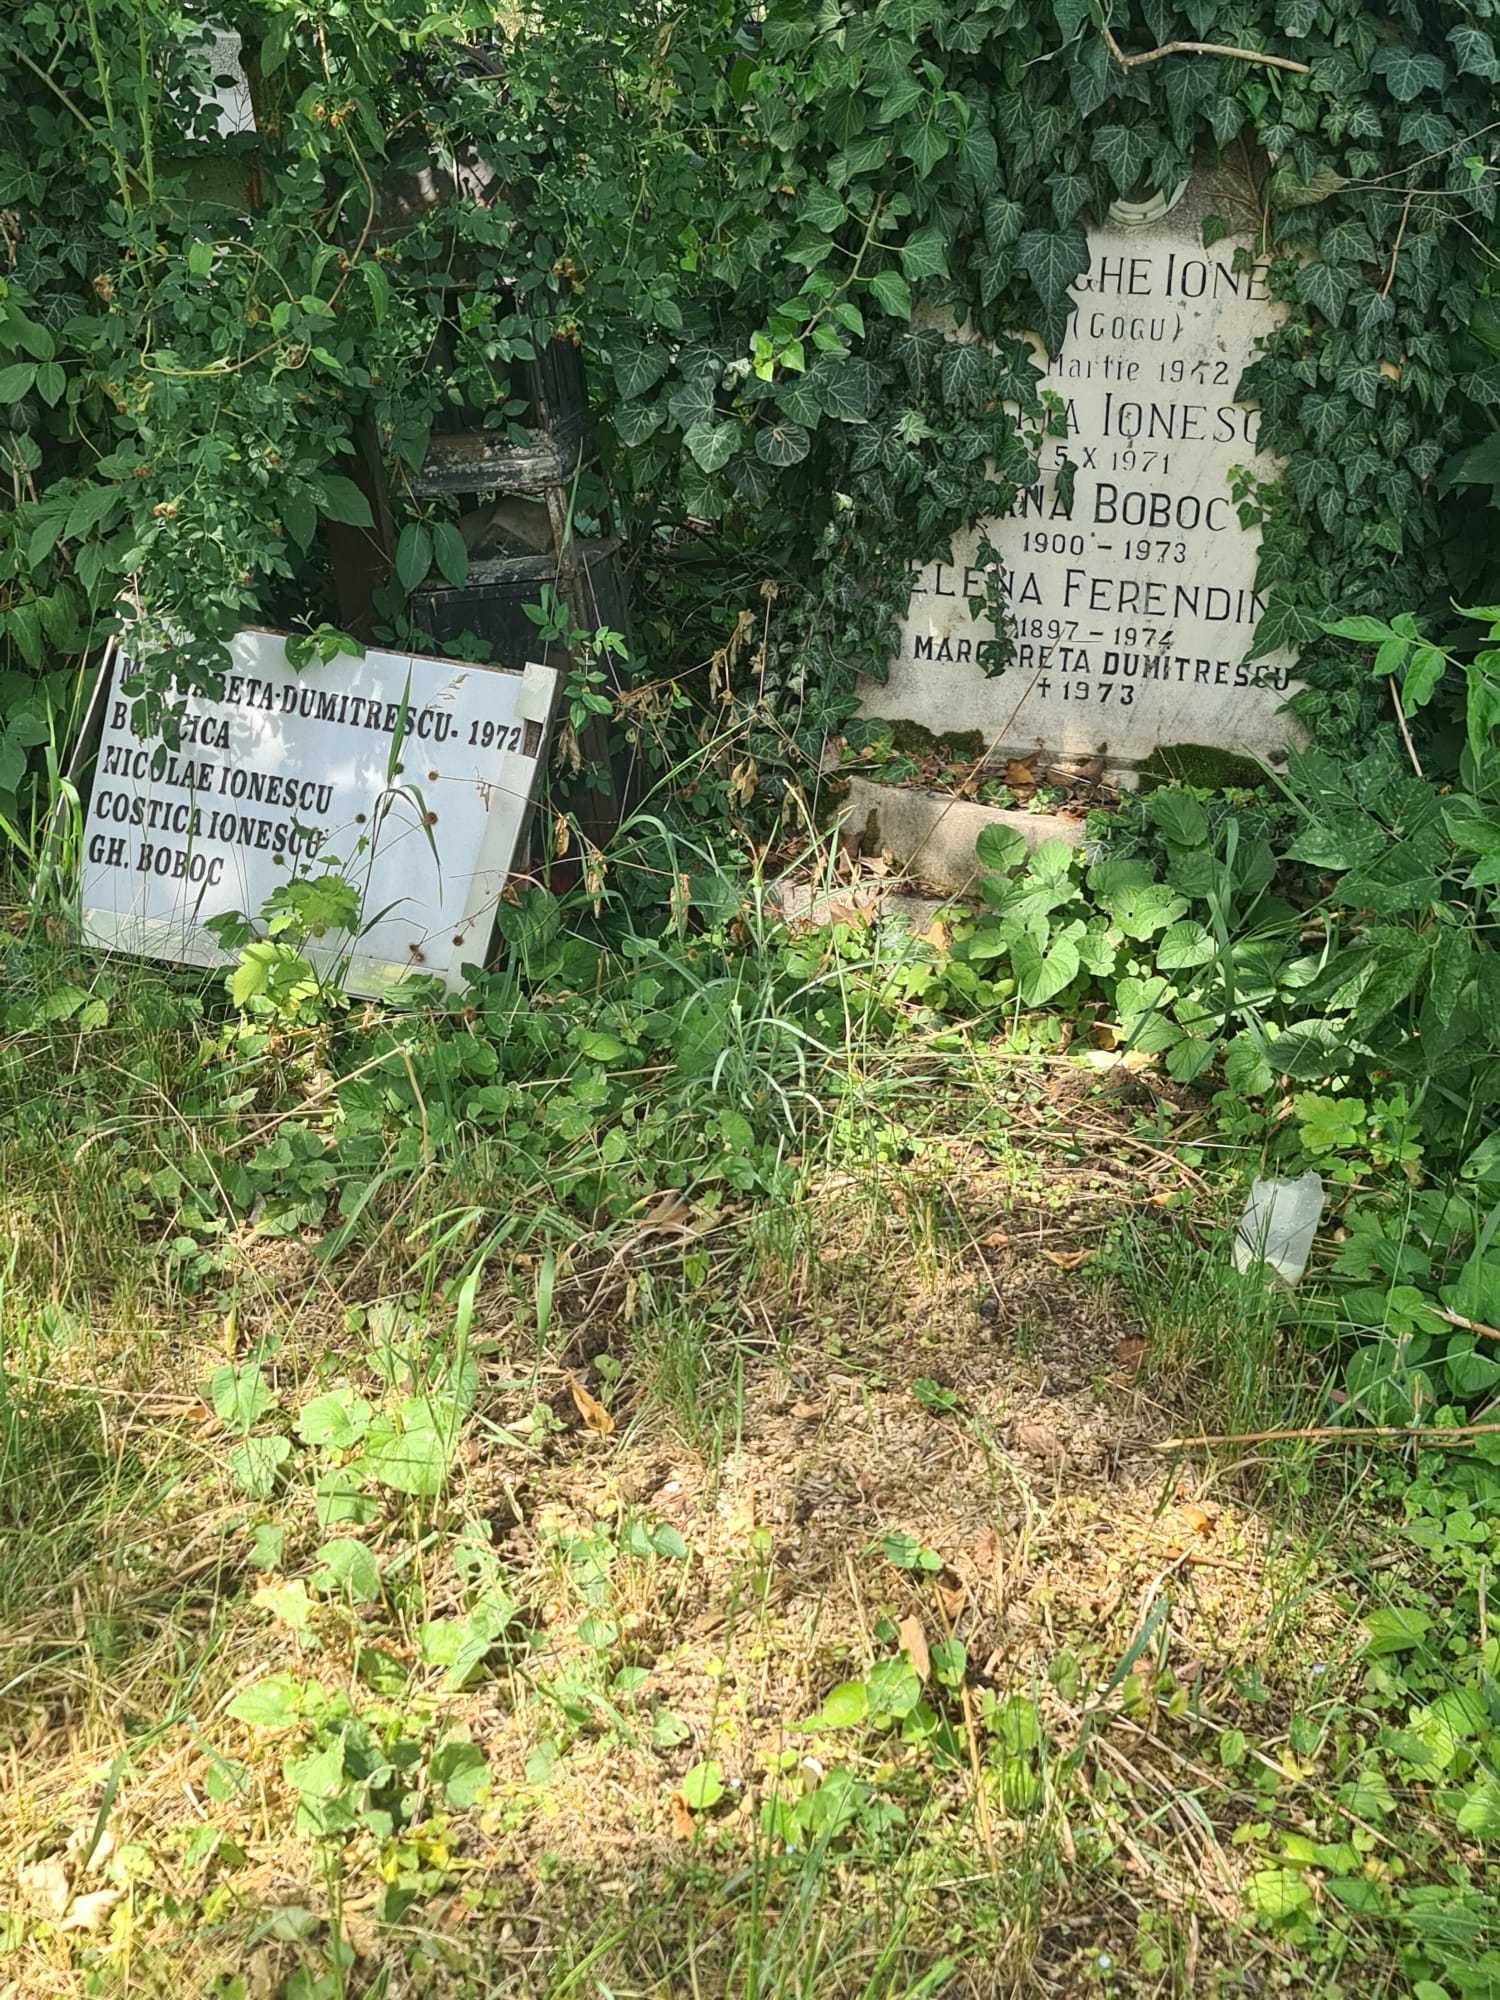 Vand loc de veci cimitirul Sf Vineri